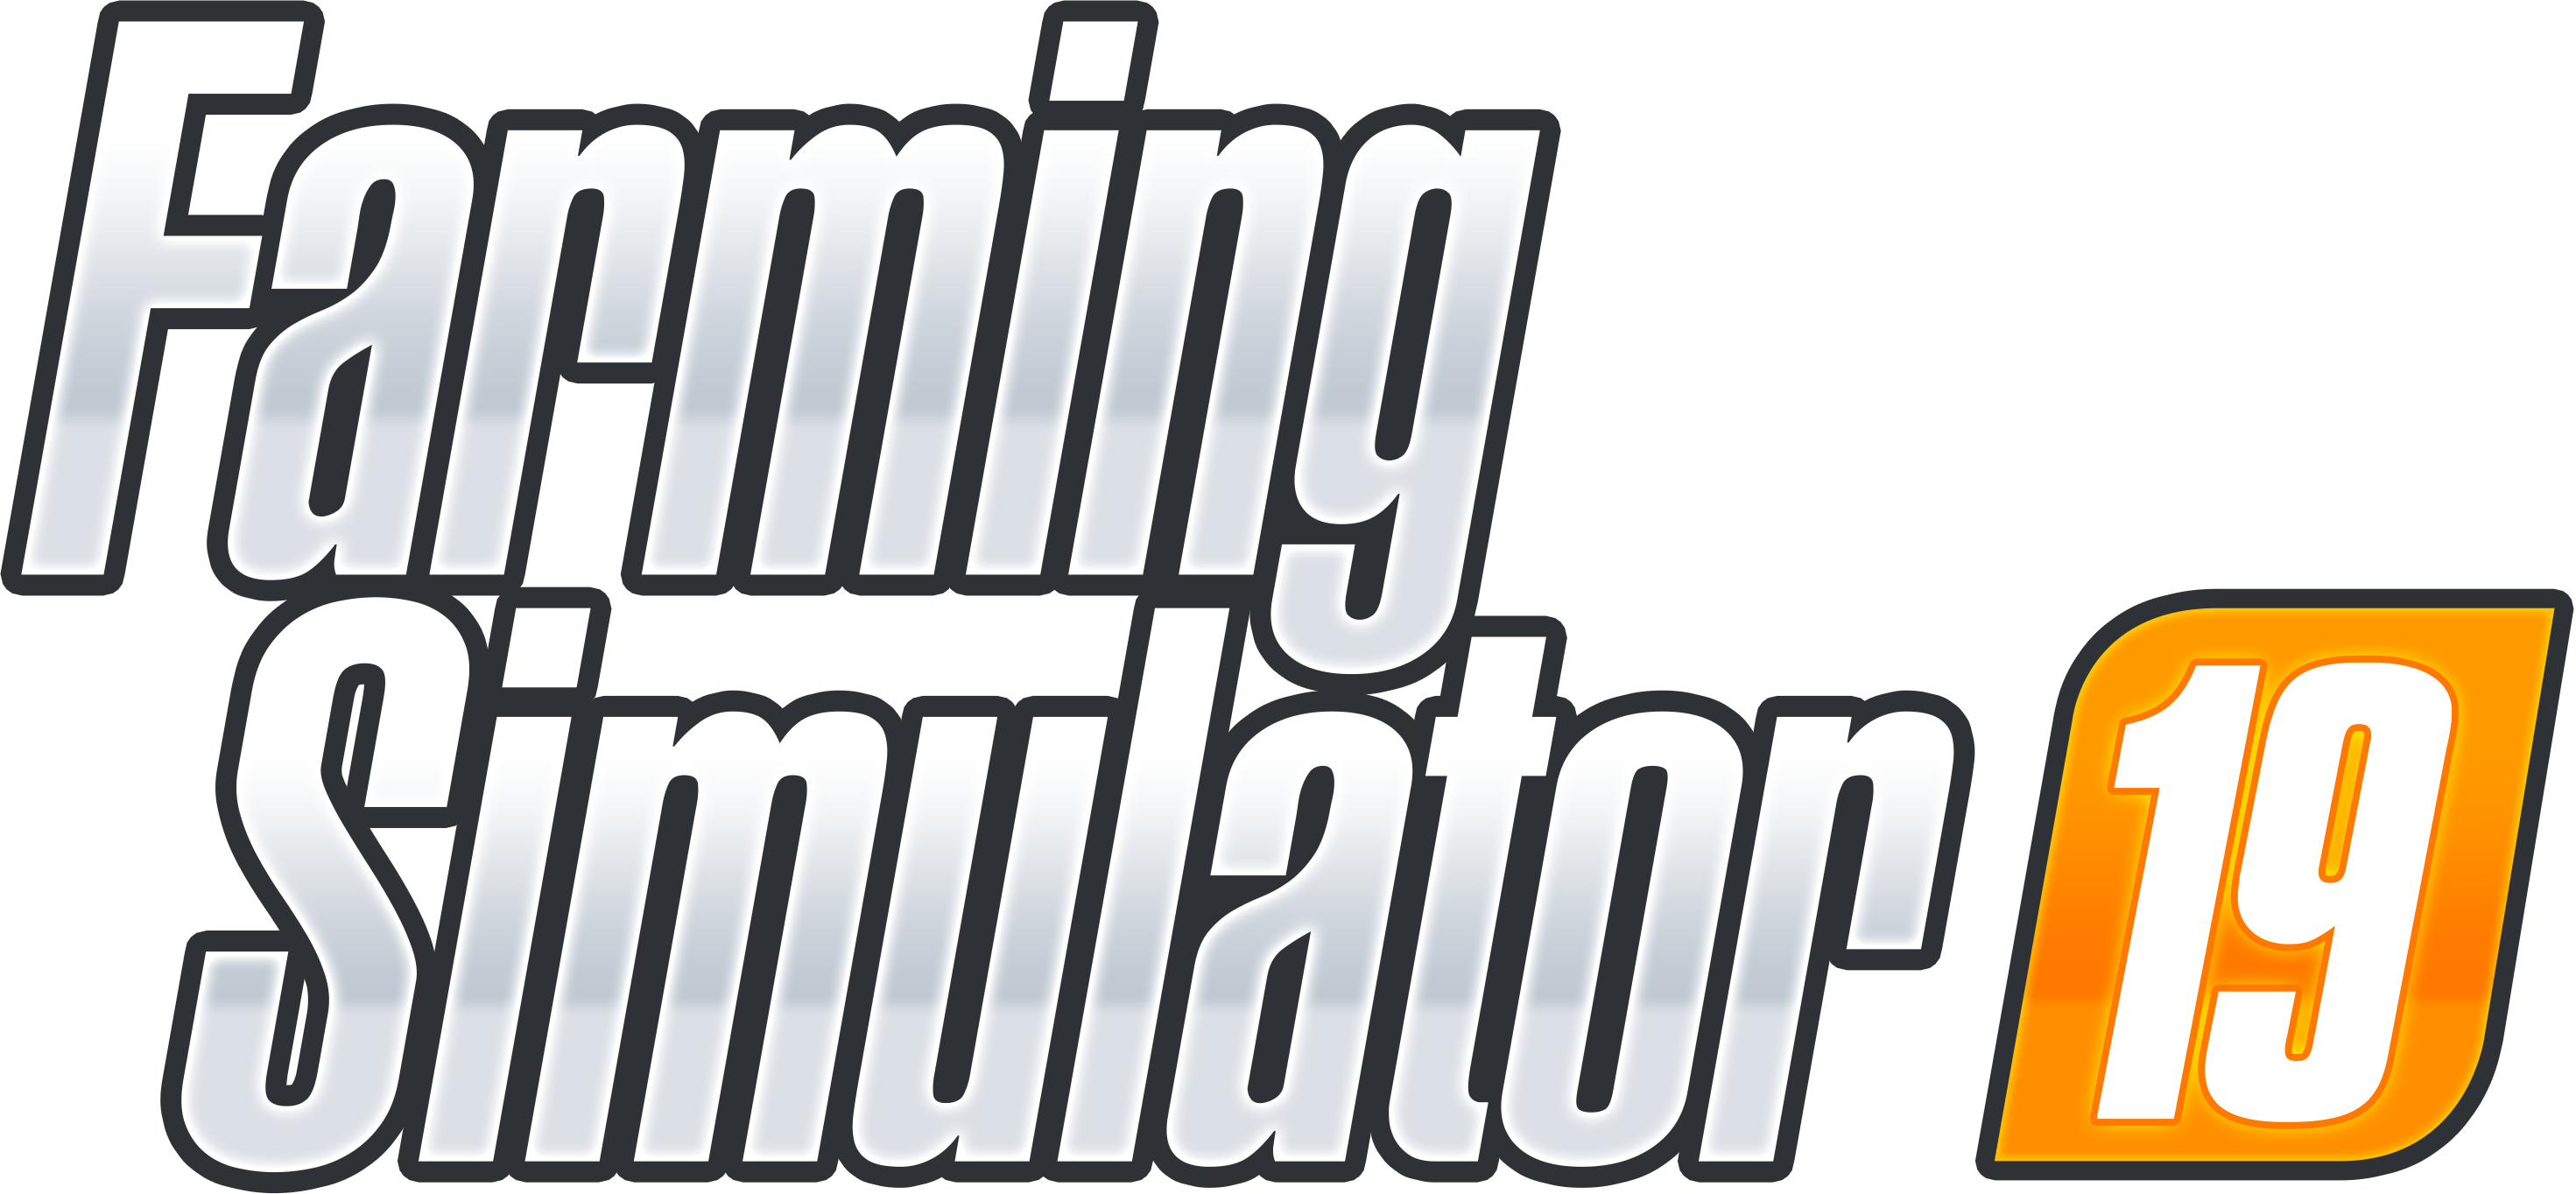 15 14 17 Area Text Simulator Farming PNG Image